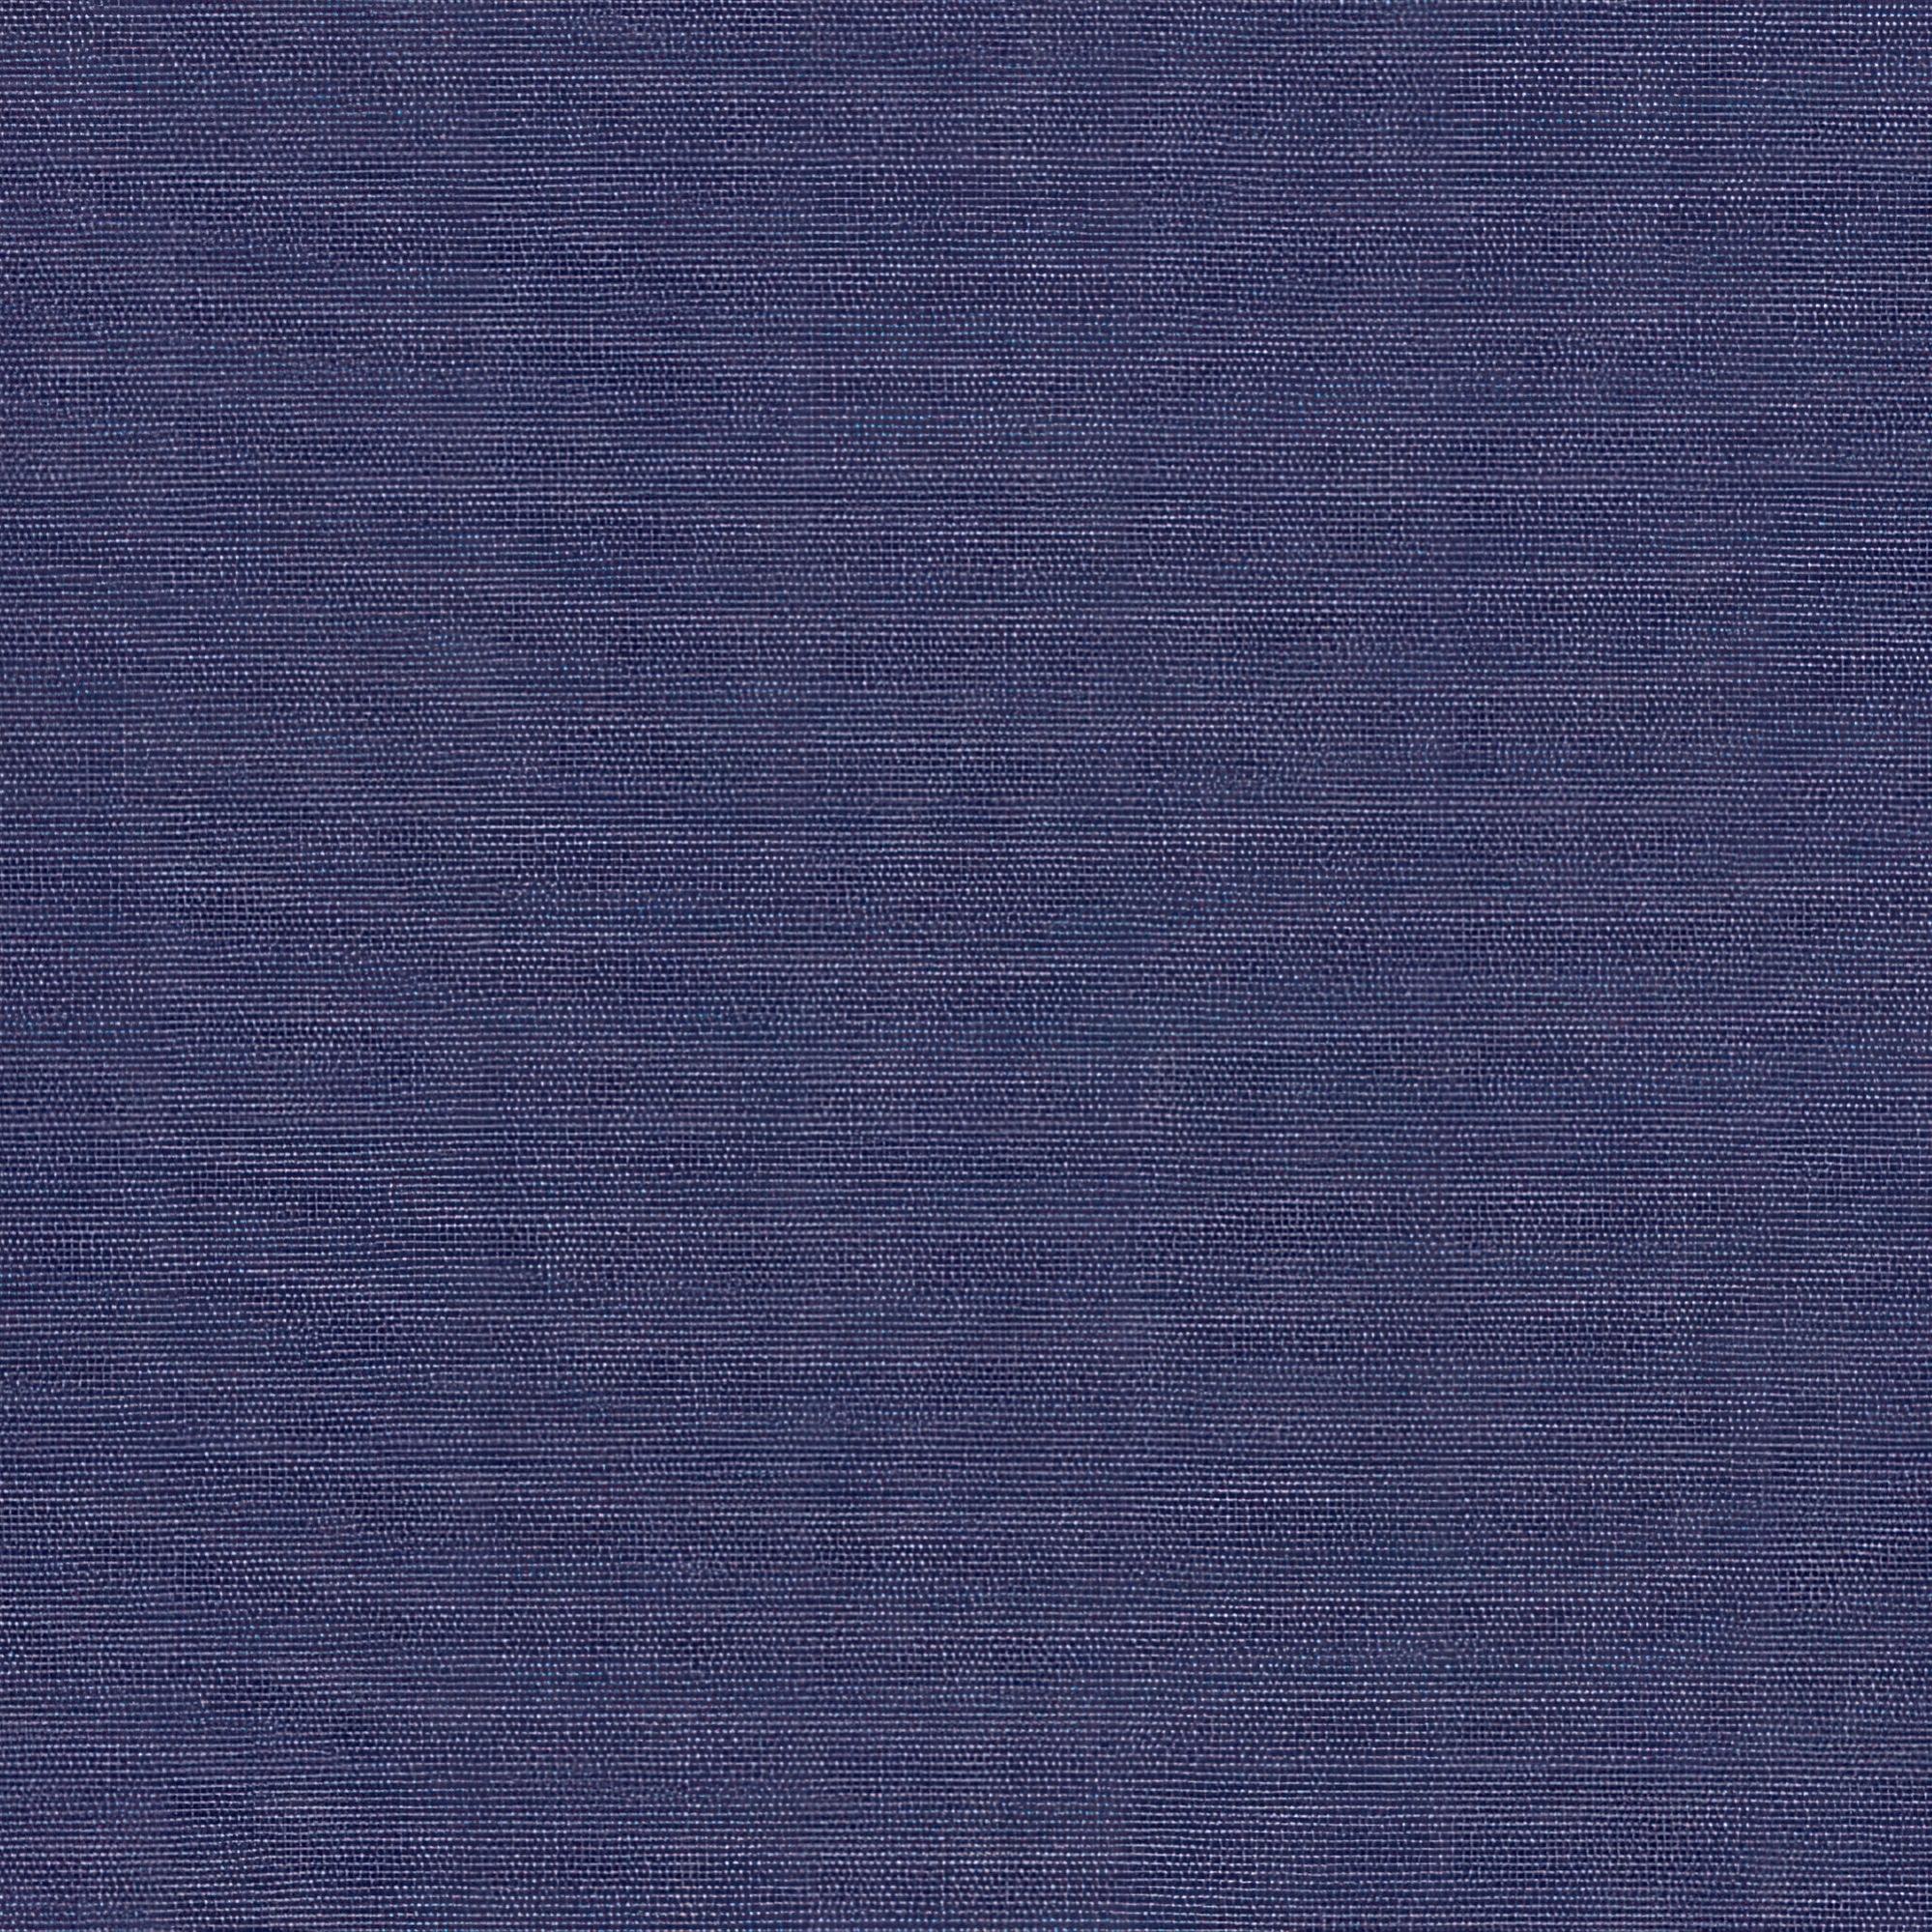 Tela al corte tapicería loneta portals azul ancho 160 cm